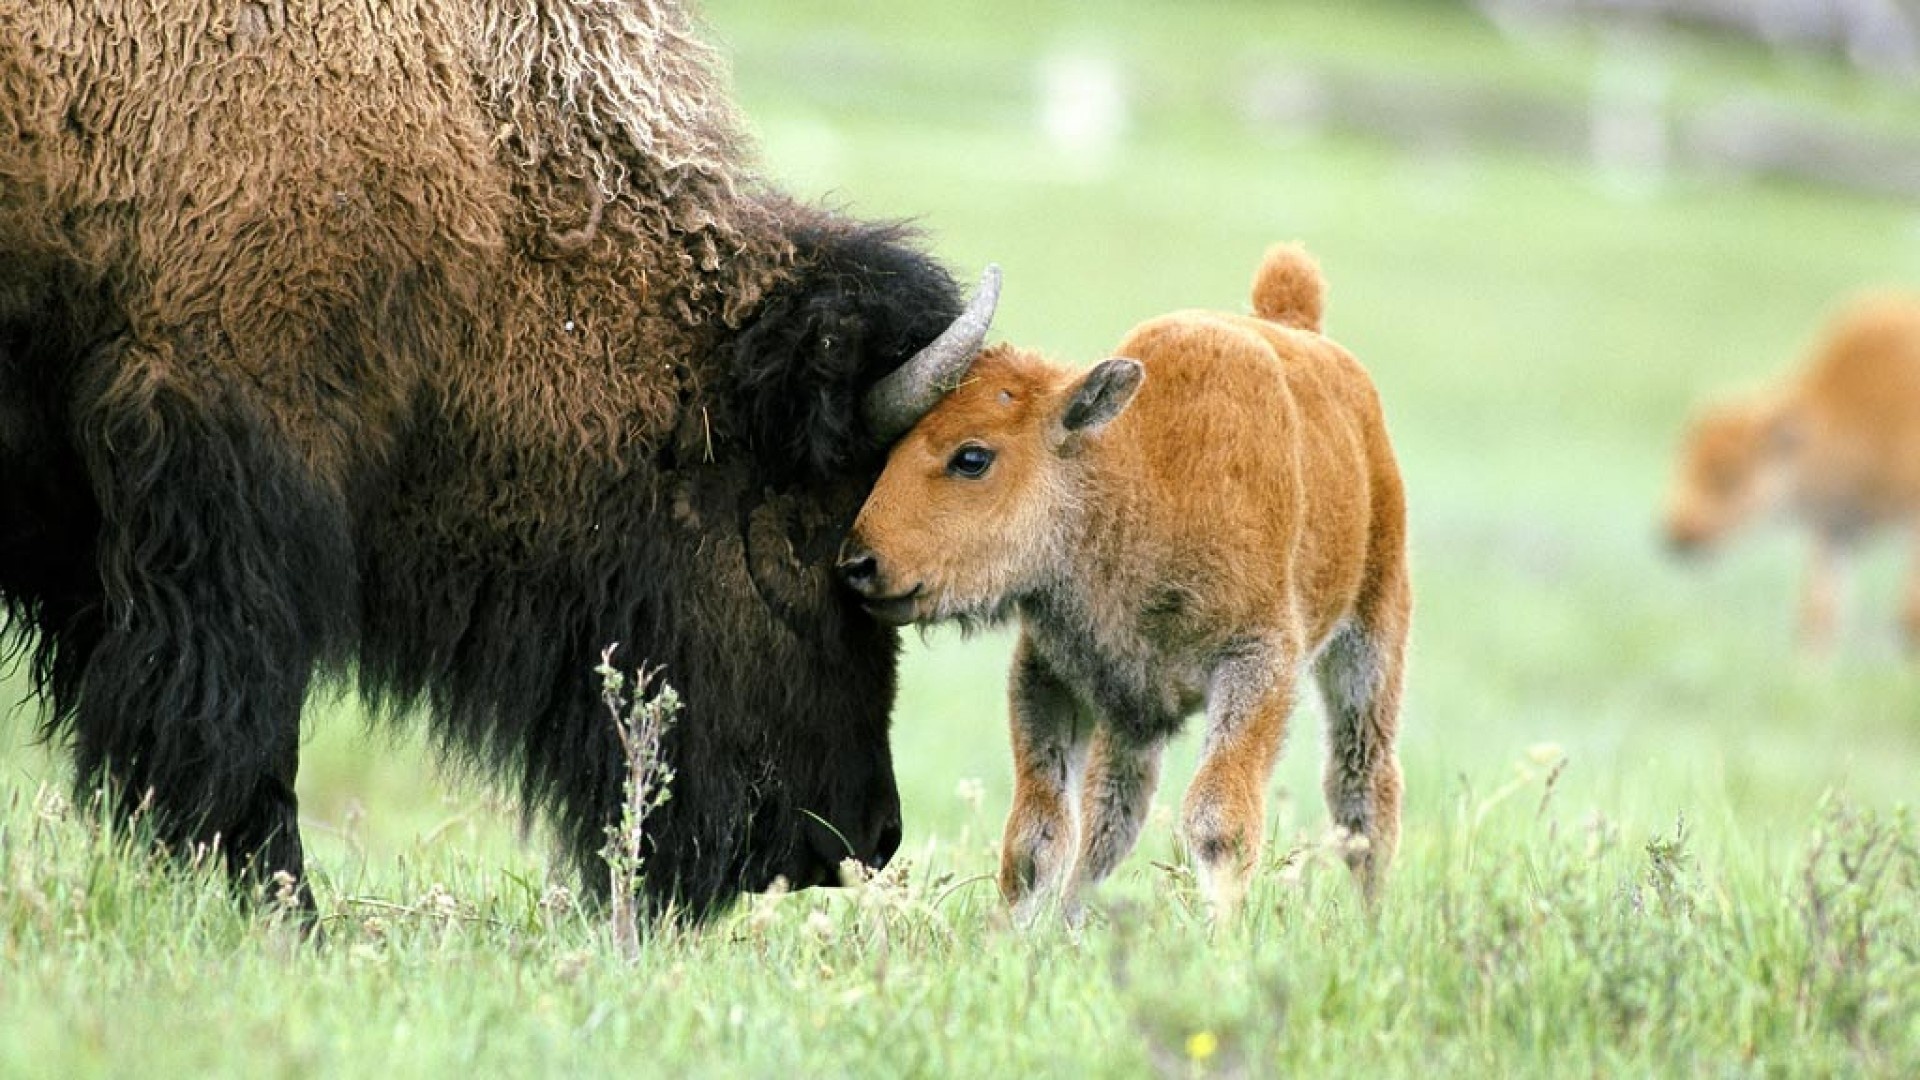 Buffalo, Majestic creatures, Bison in their habitat, Nature's balance, 1920x1080 Full HD Desktop